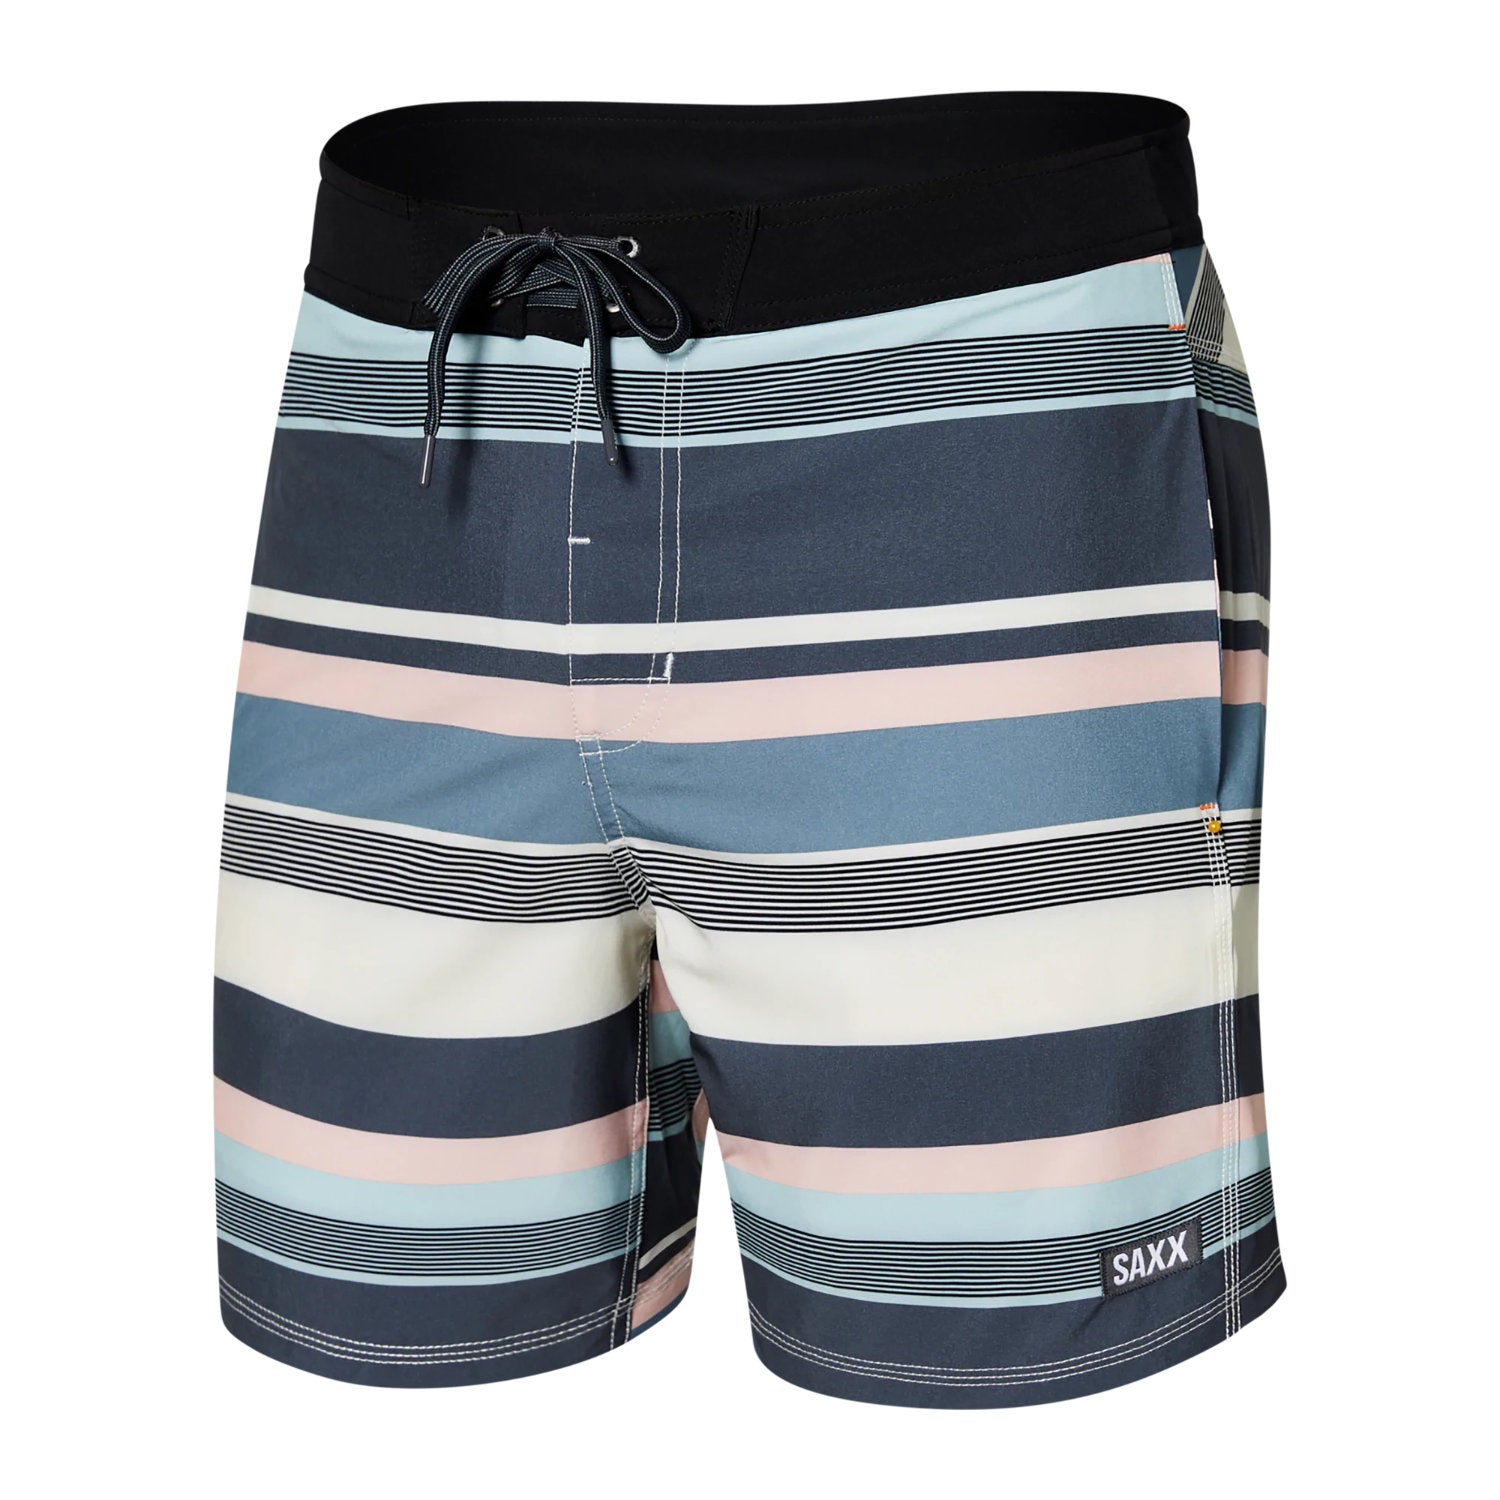 Betawave 17 Swim Shorts